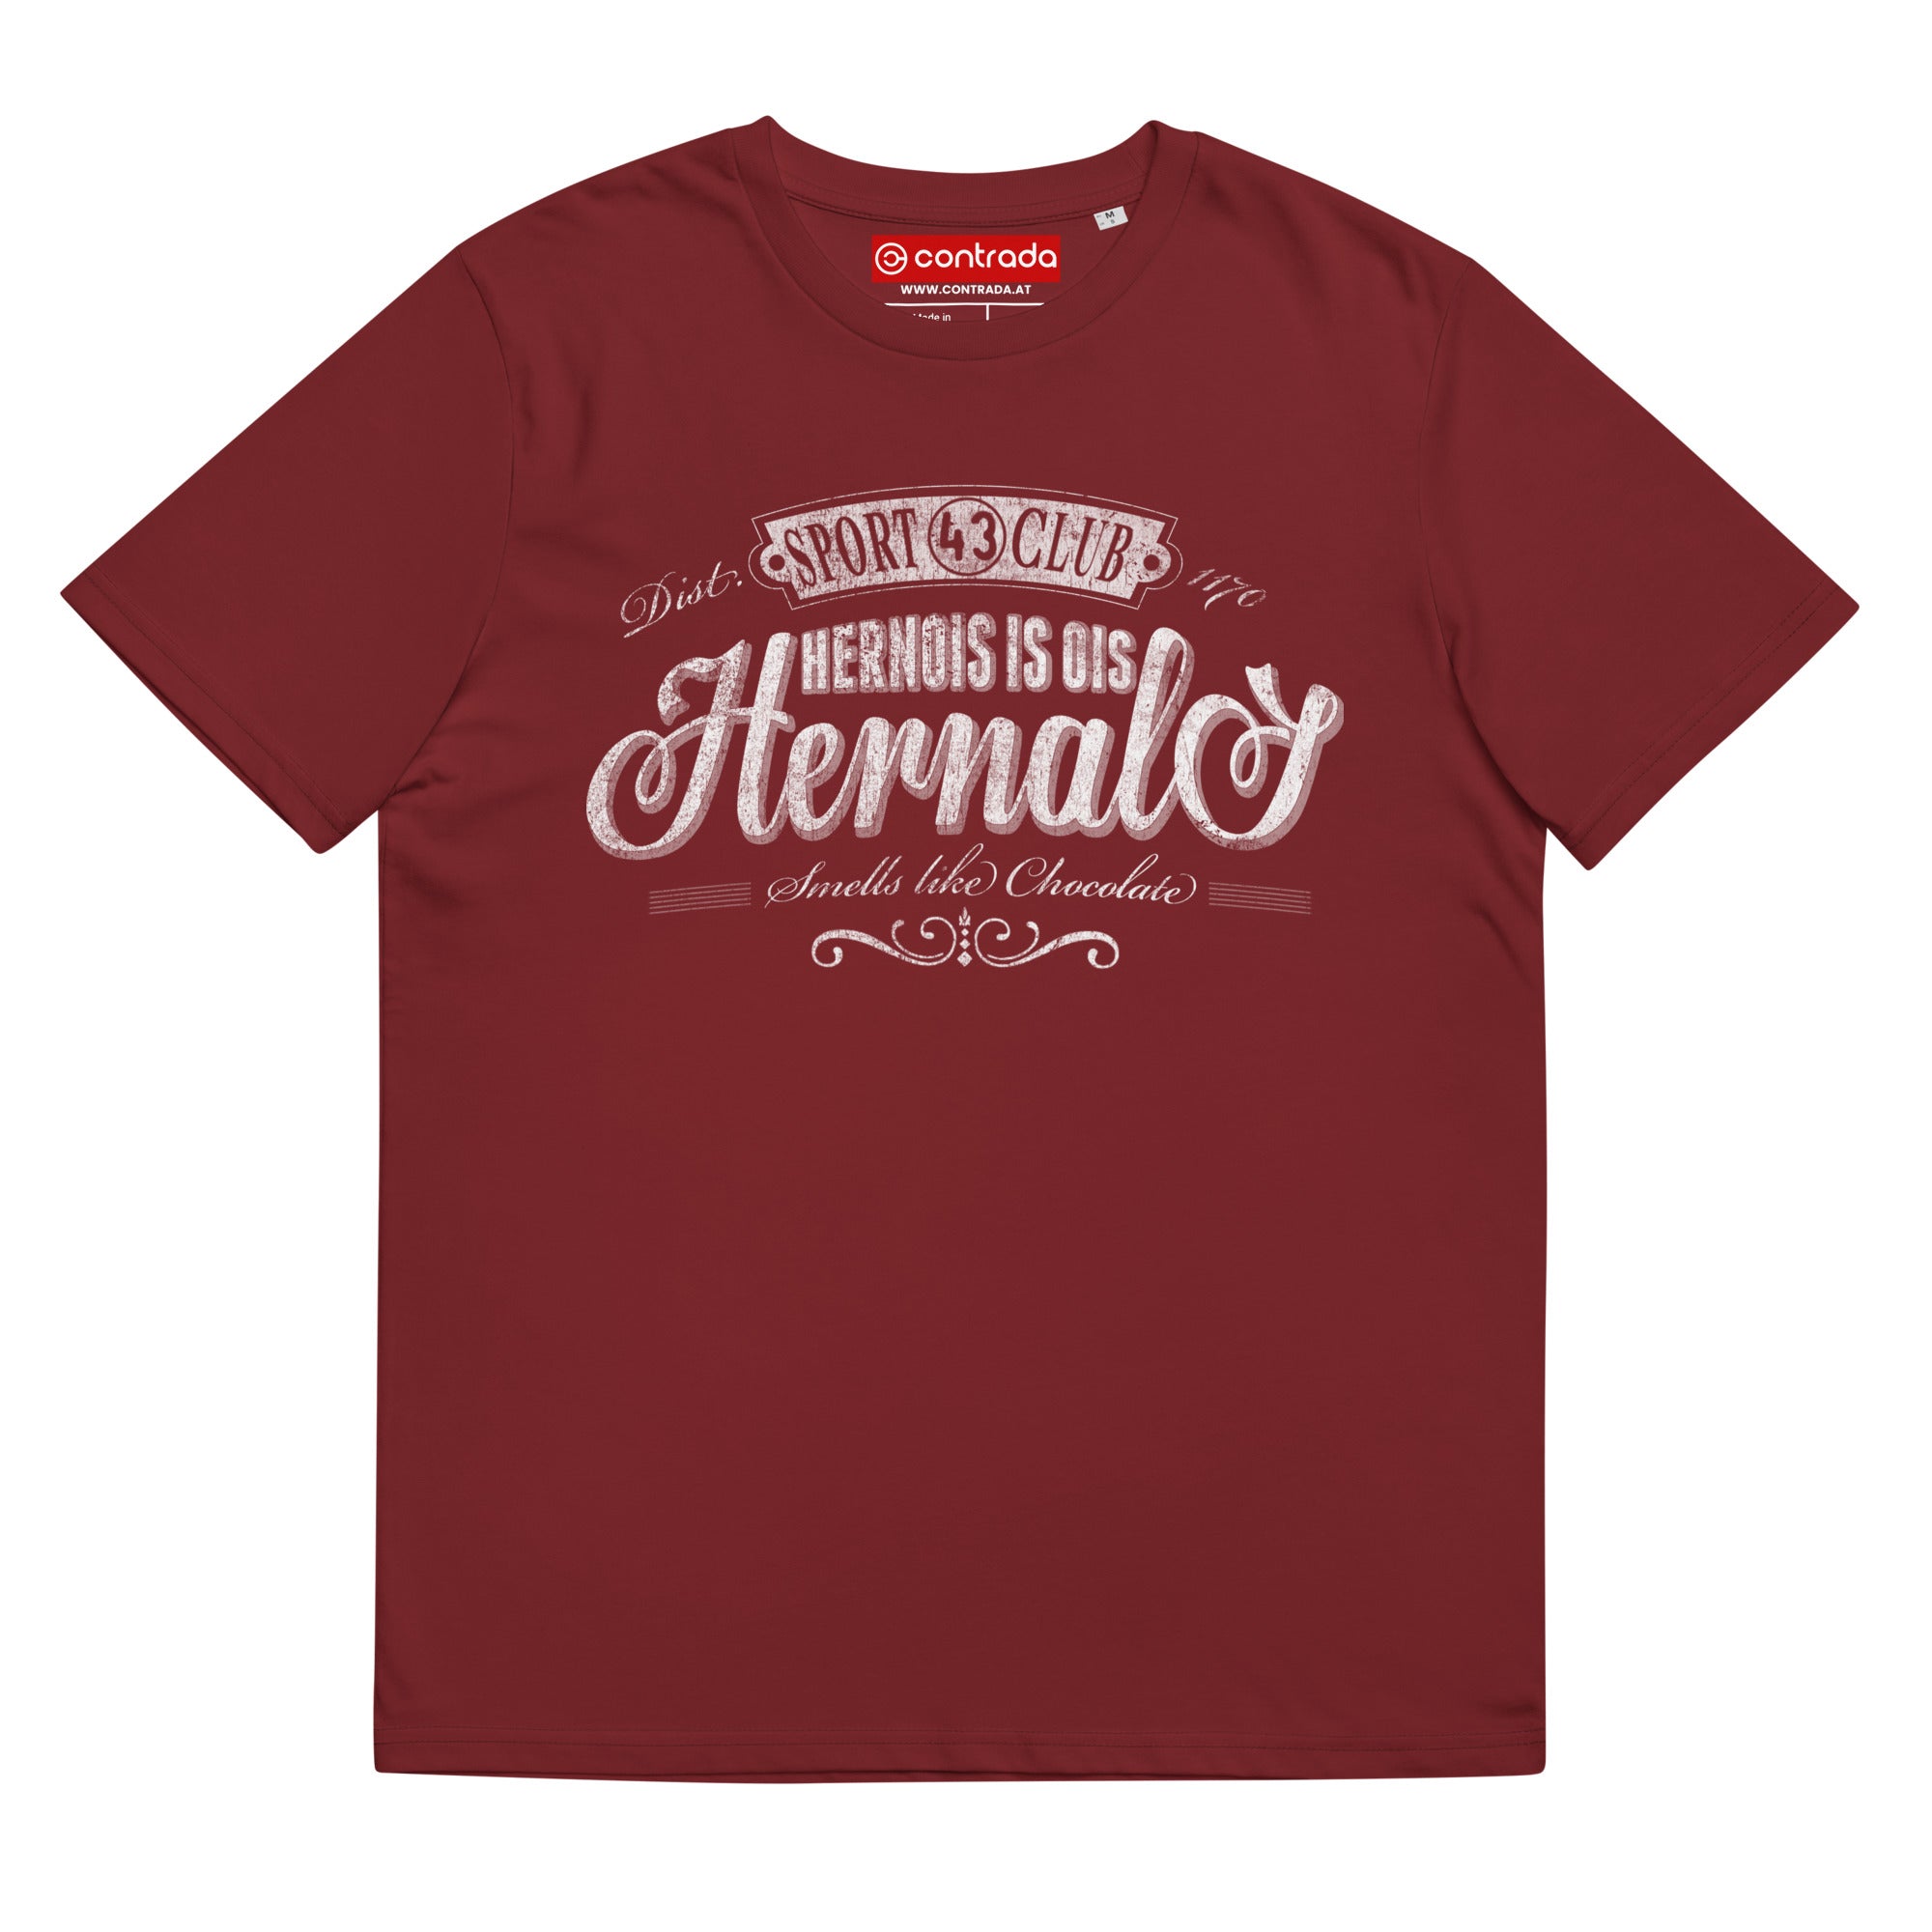 17., Hernals, Wien, „Americana“, Classic Premium, 100% Bio-Baumwoll T-Shirt